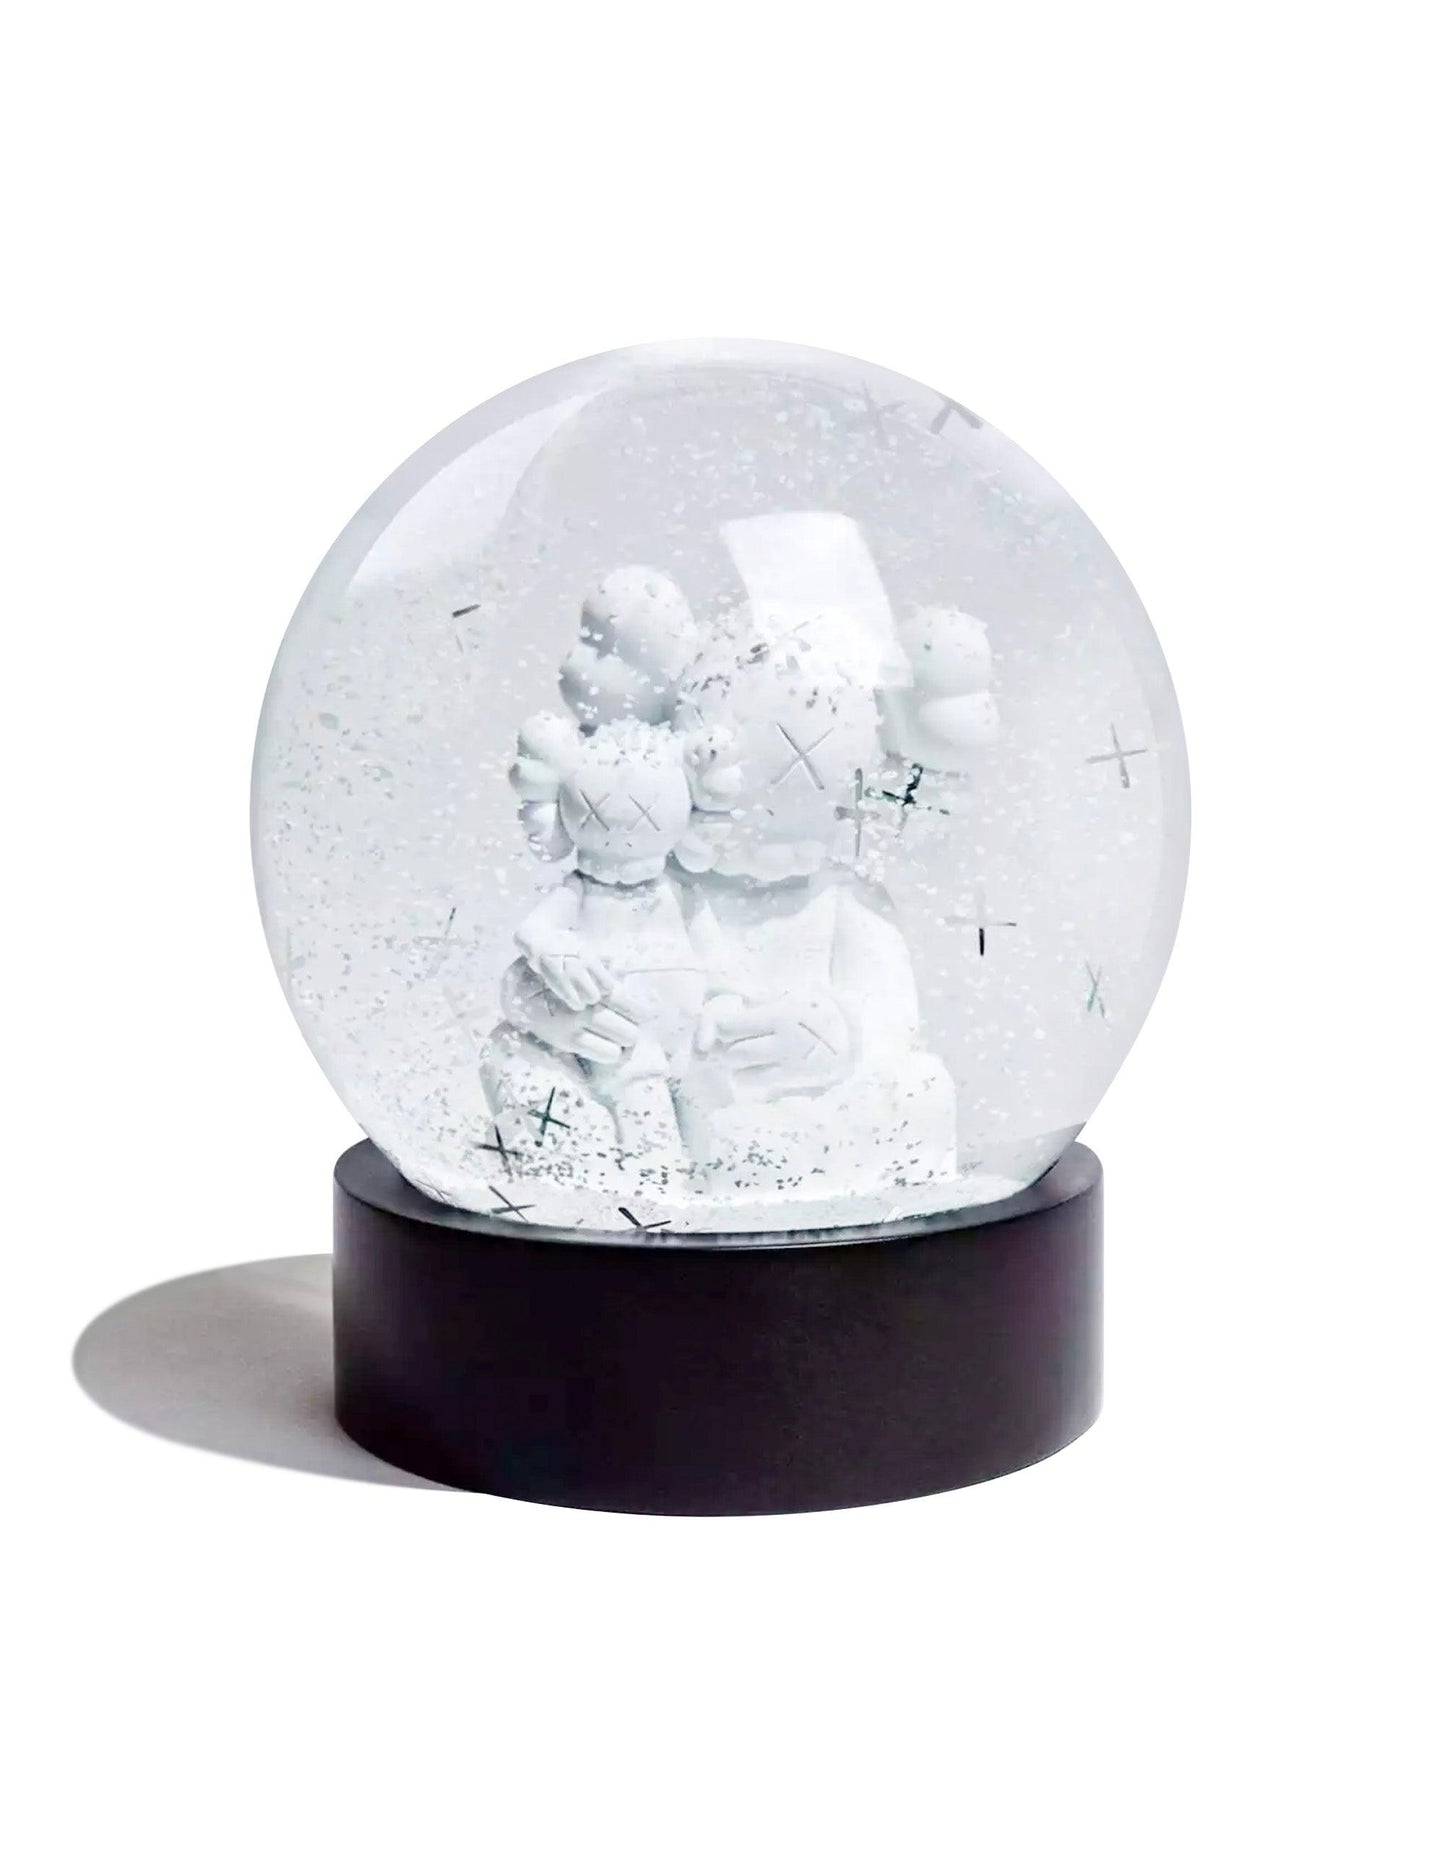 Pop Art Fusion - PopArtFusion - KAWS KAWS - Holiday Changbai Mountain Snow Globe, 2022 popartfusion.com by Conectid